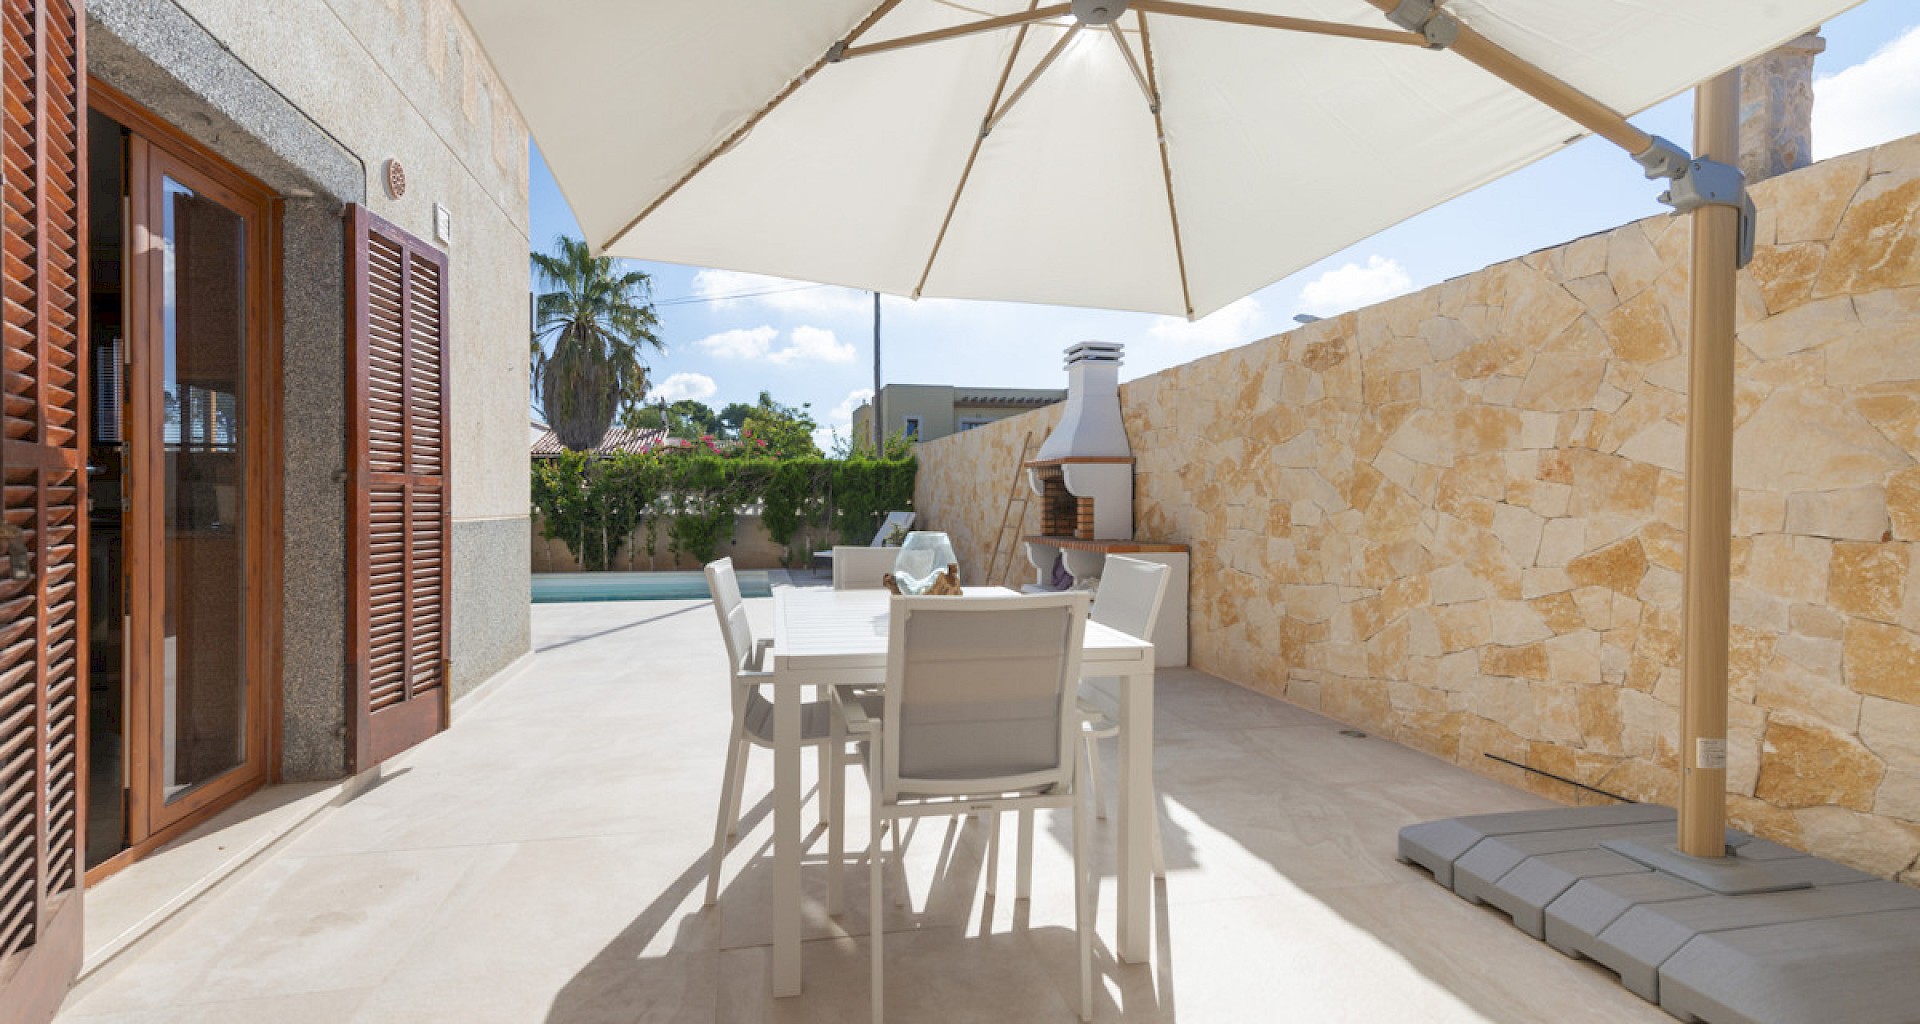 KROHN & LUEDEMANN Semi-detached house with pool for sale in Bahia Blava 